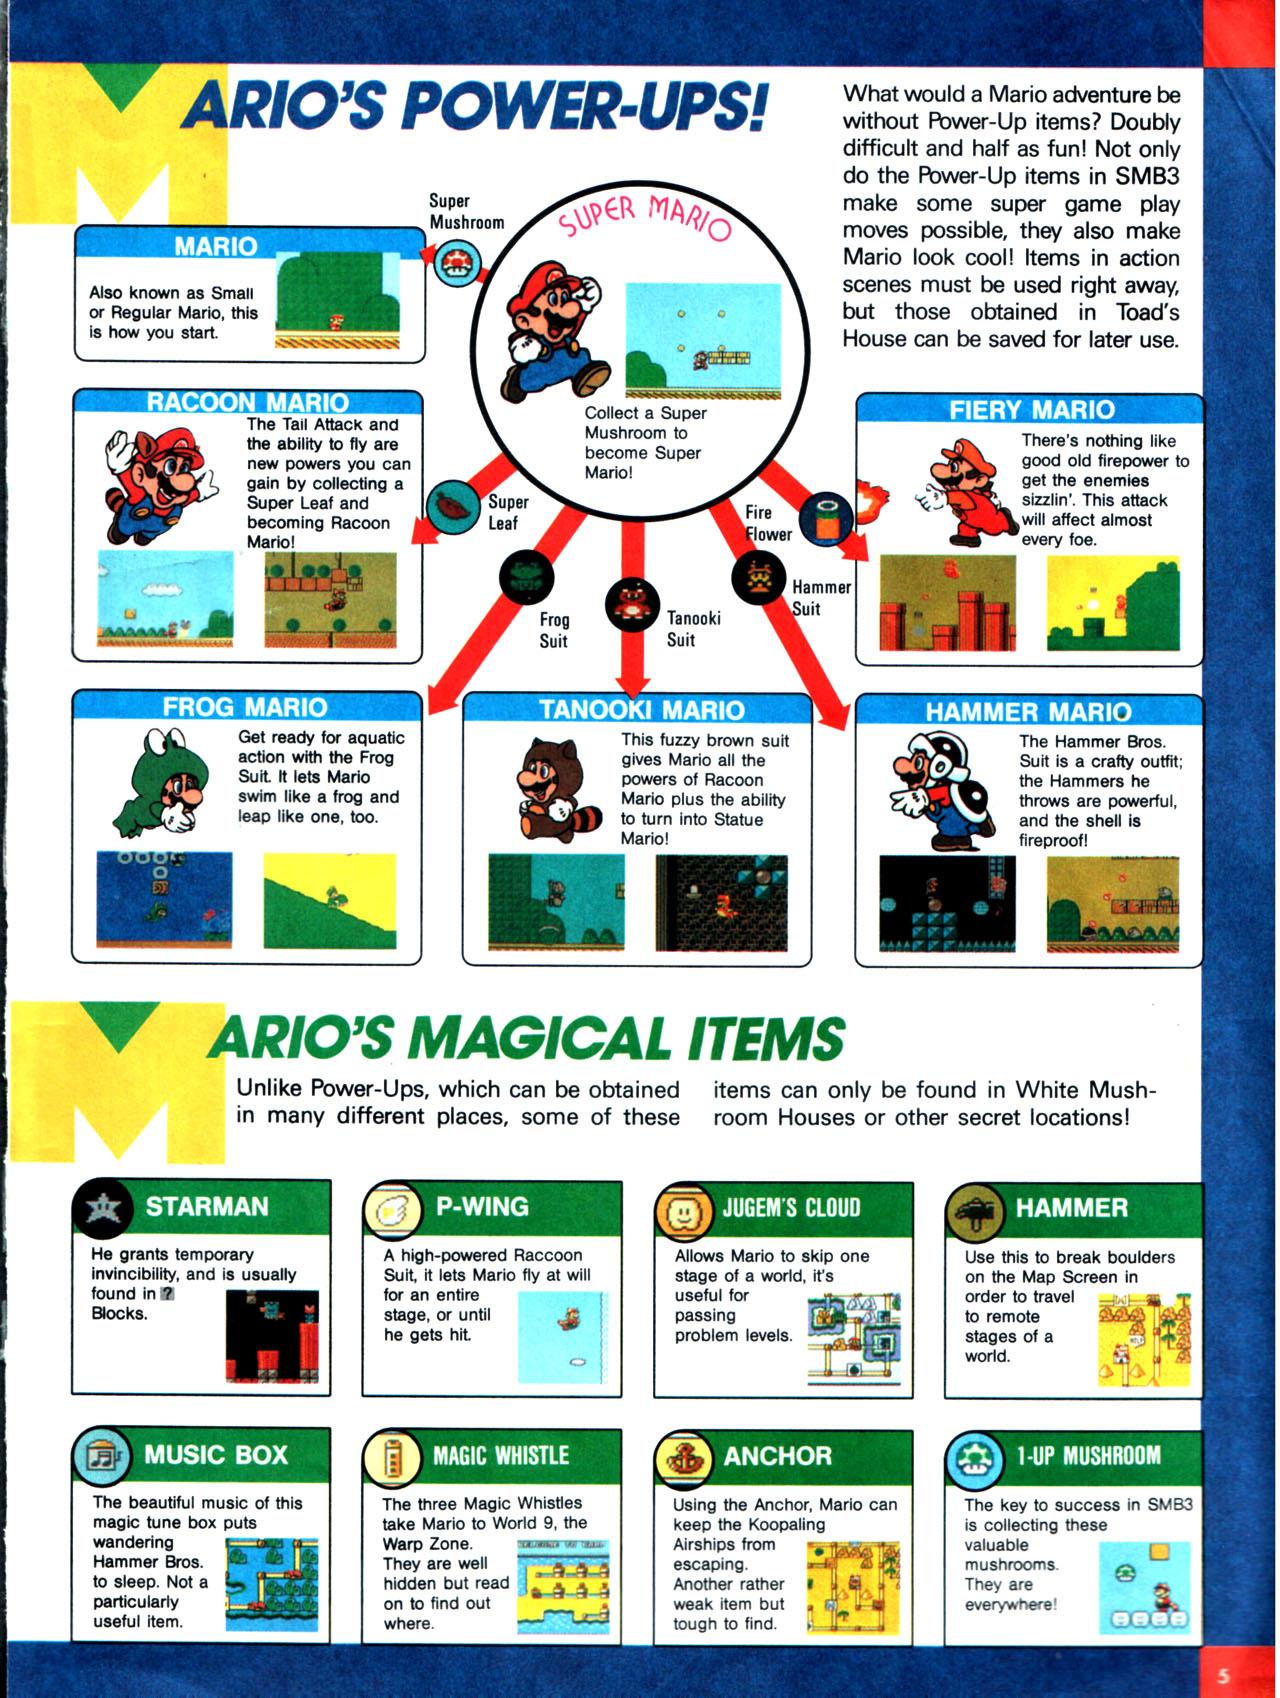 Super Mario Bros 3 Full Guide In Nintendo Power Vol 13